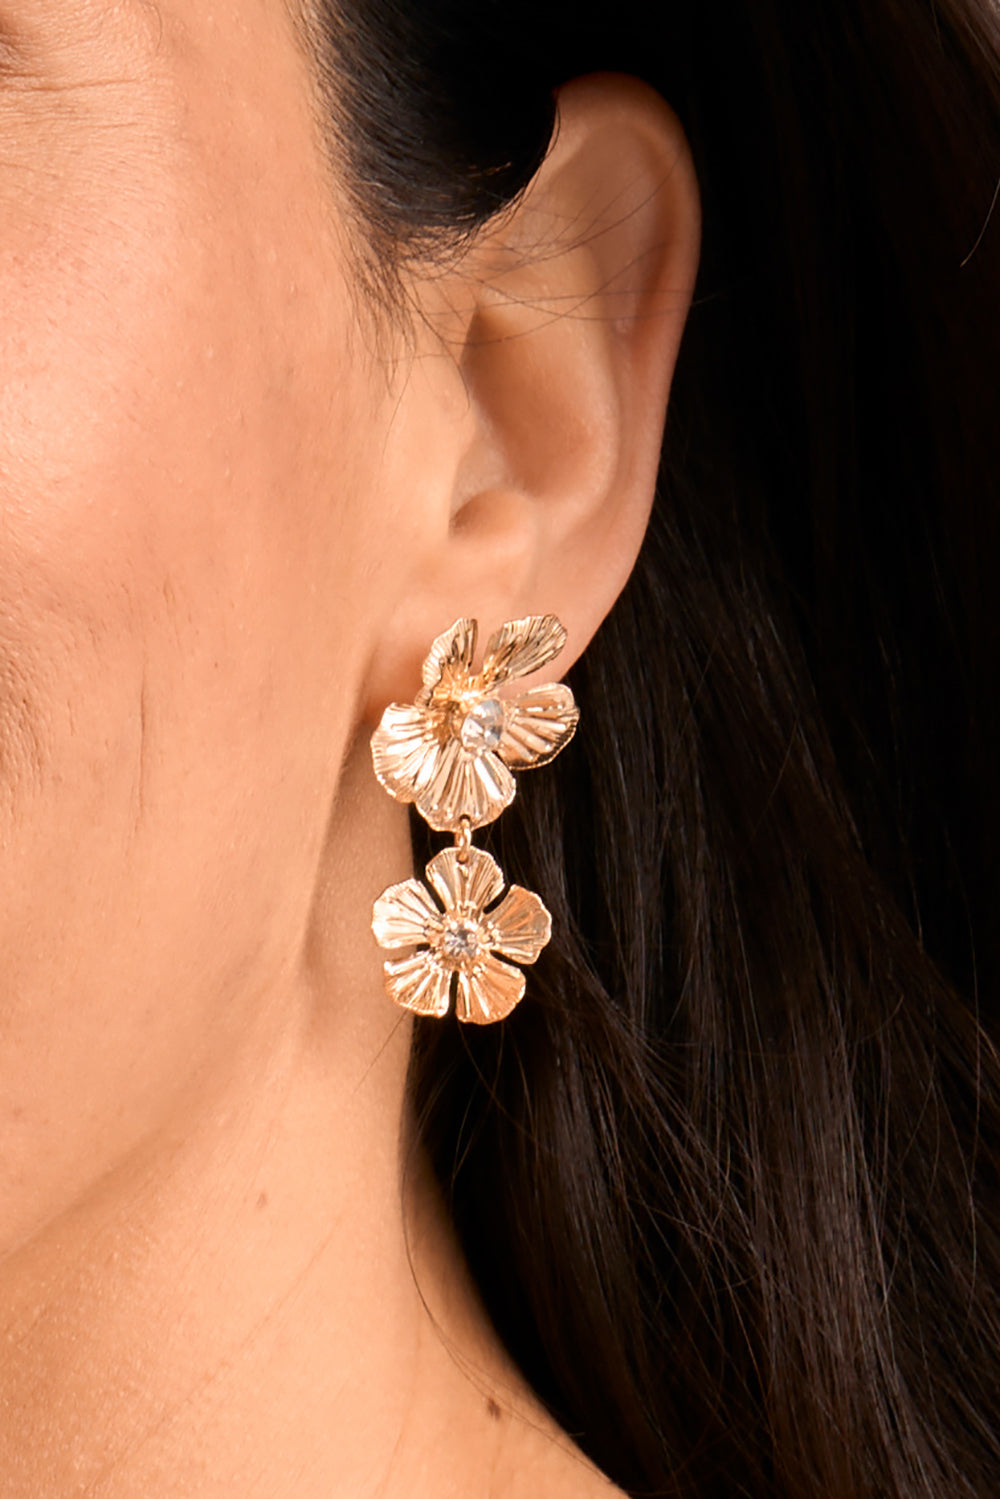 Aggregate more than 132 flower dangle earrings latest